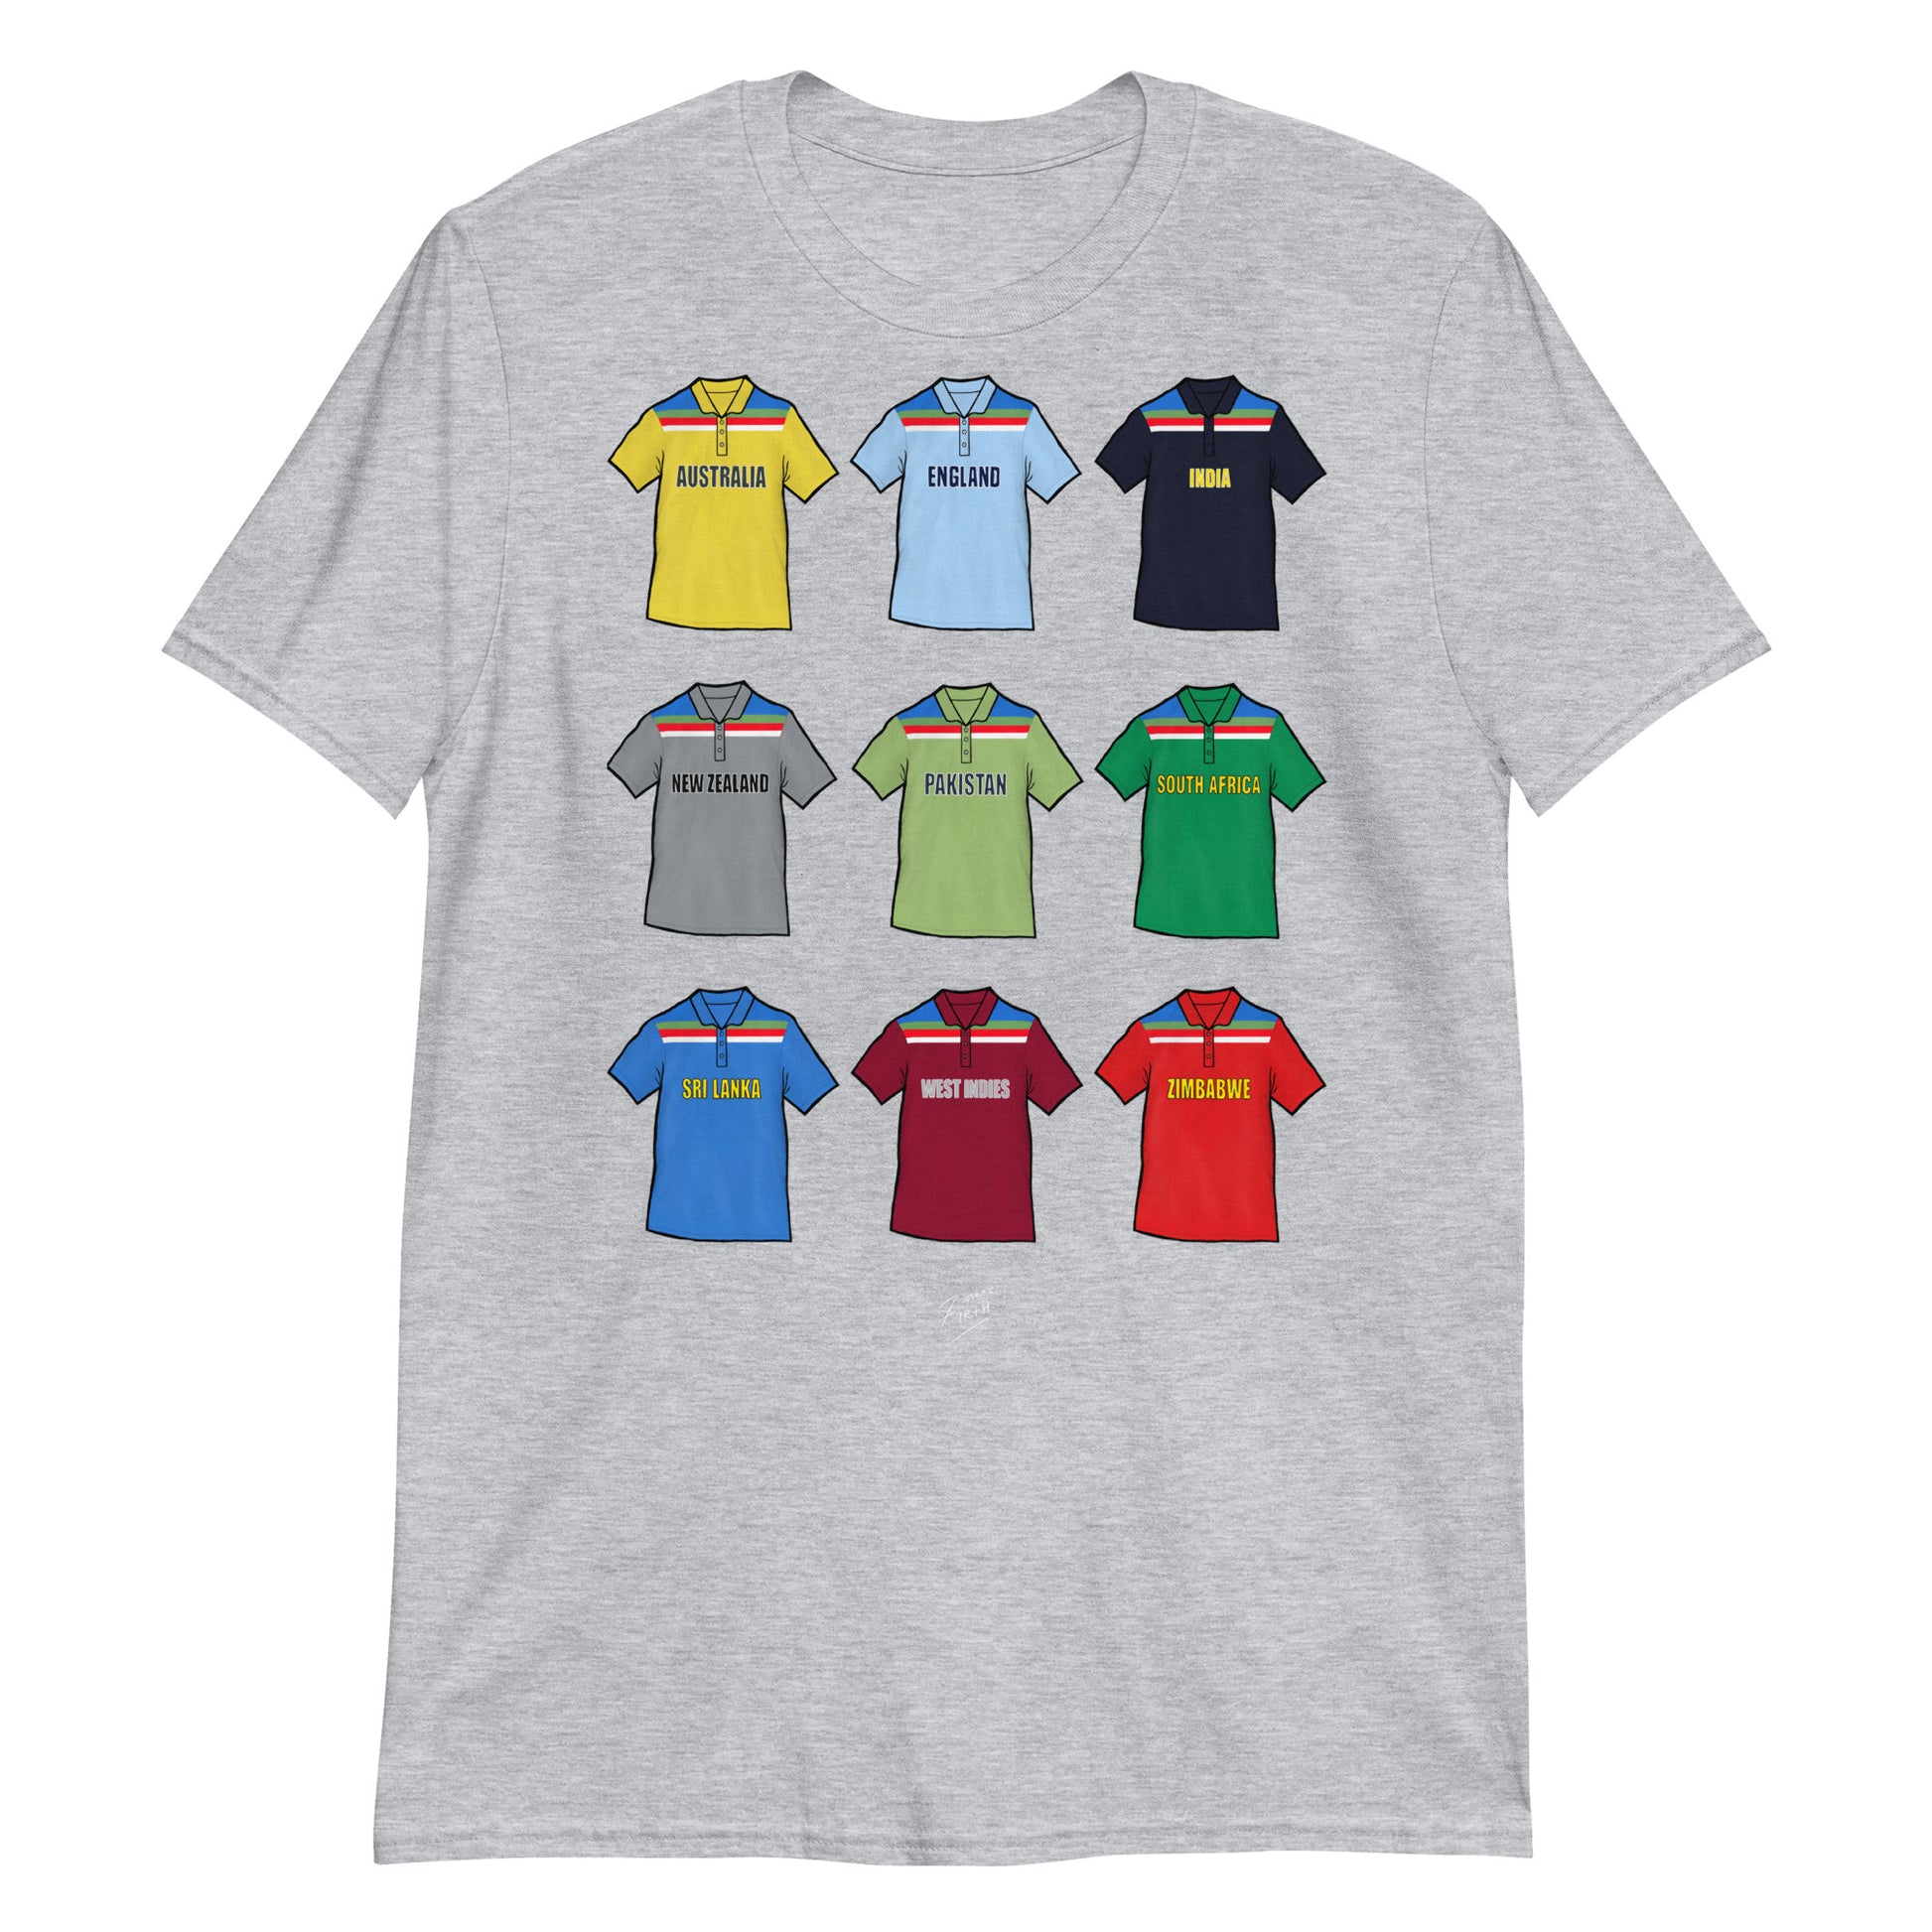 Light Grey Cricket T-shirt with illustrated artwork on them. Featuring nations Australia, England, India, New Zealand, Pakistan, South Africa, Sri Lanka, West Indies & Zimbabwe